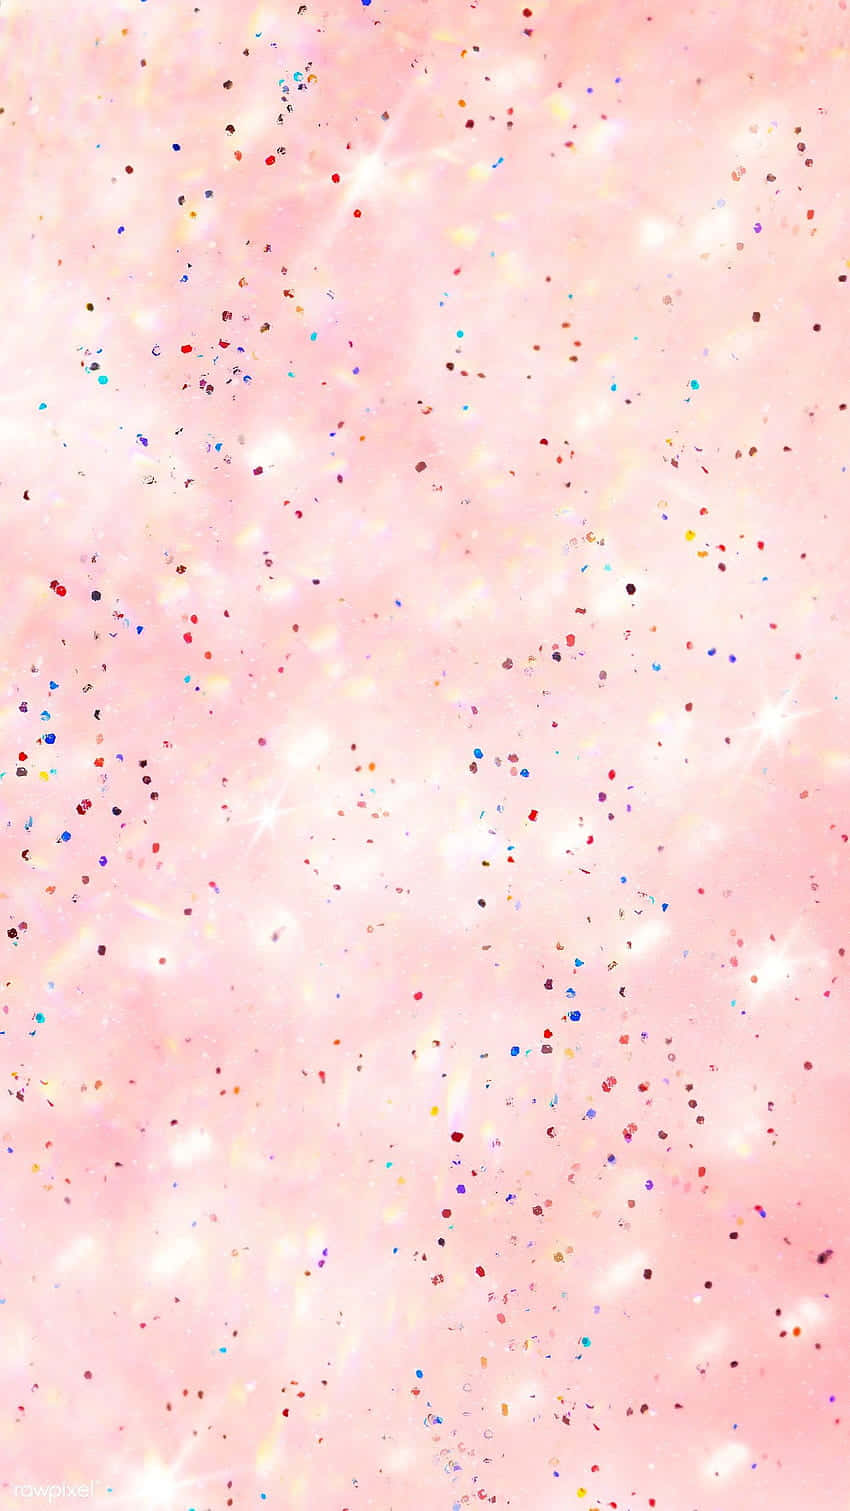 Unfondo Rosa Con Salpicaduras De Confeti